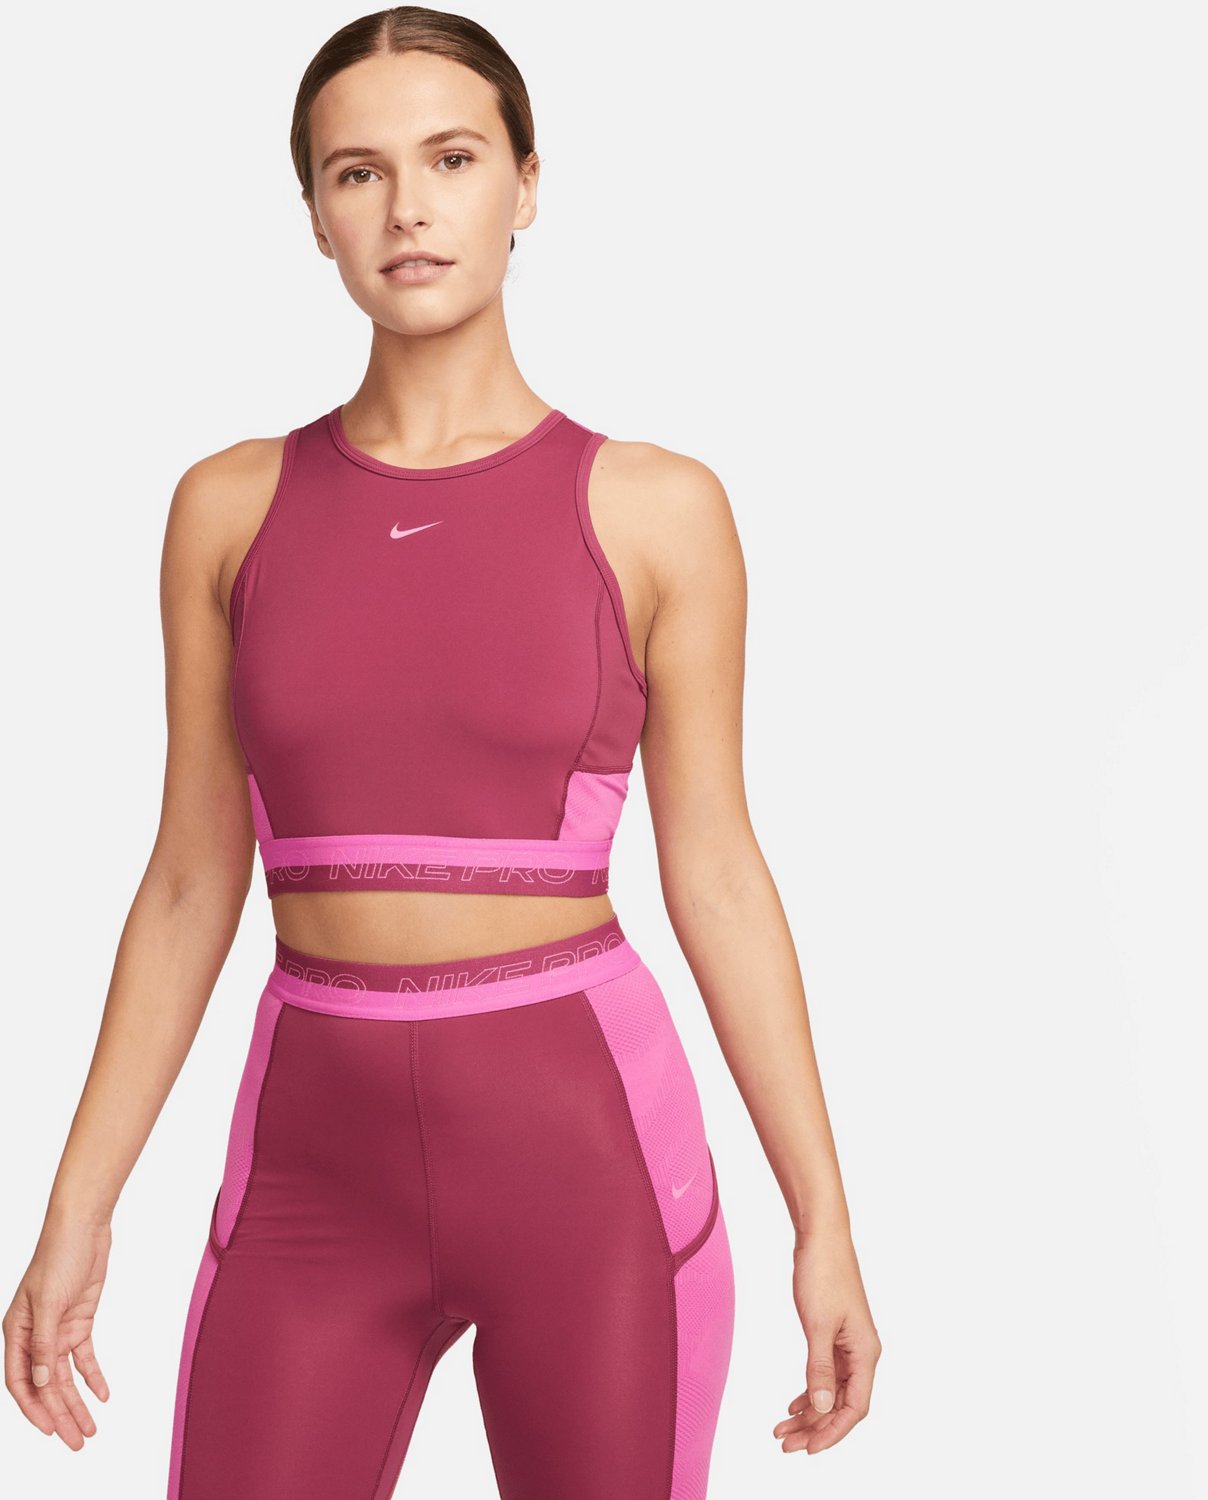 Nike Women's Pro Dri-Fit Femme Cropped Tank Top, Medium, Indigo Haze